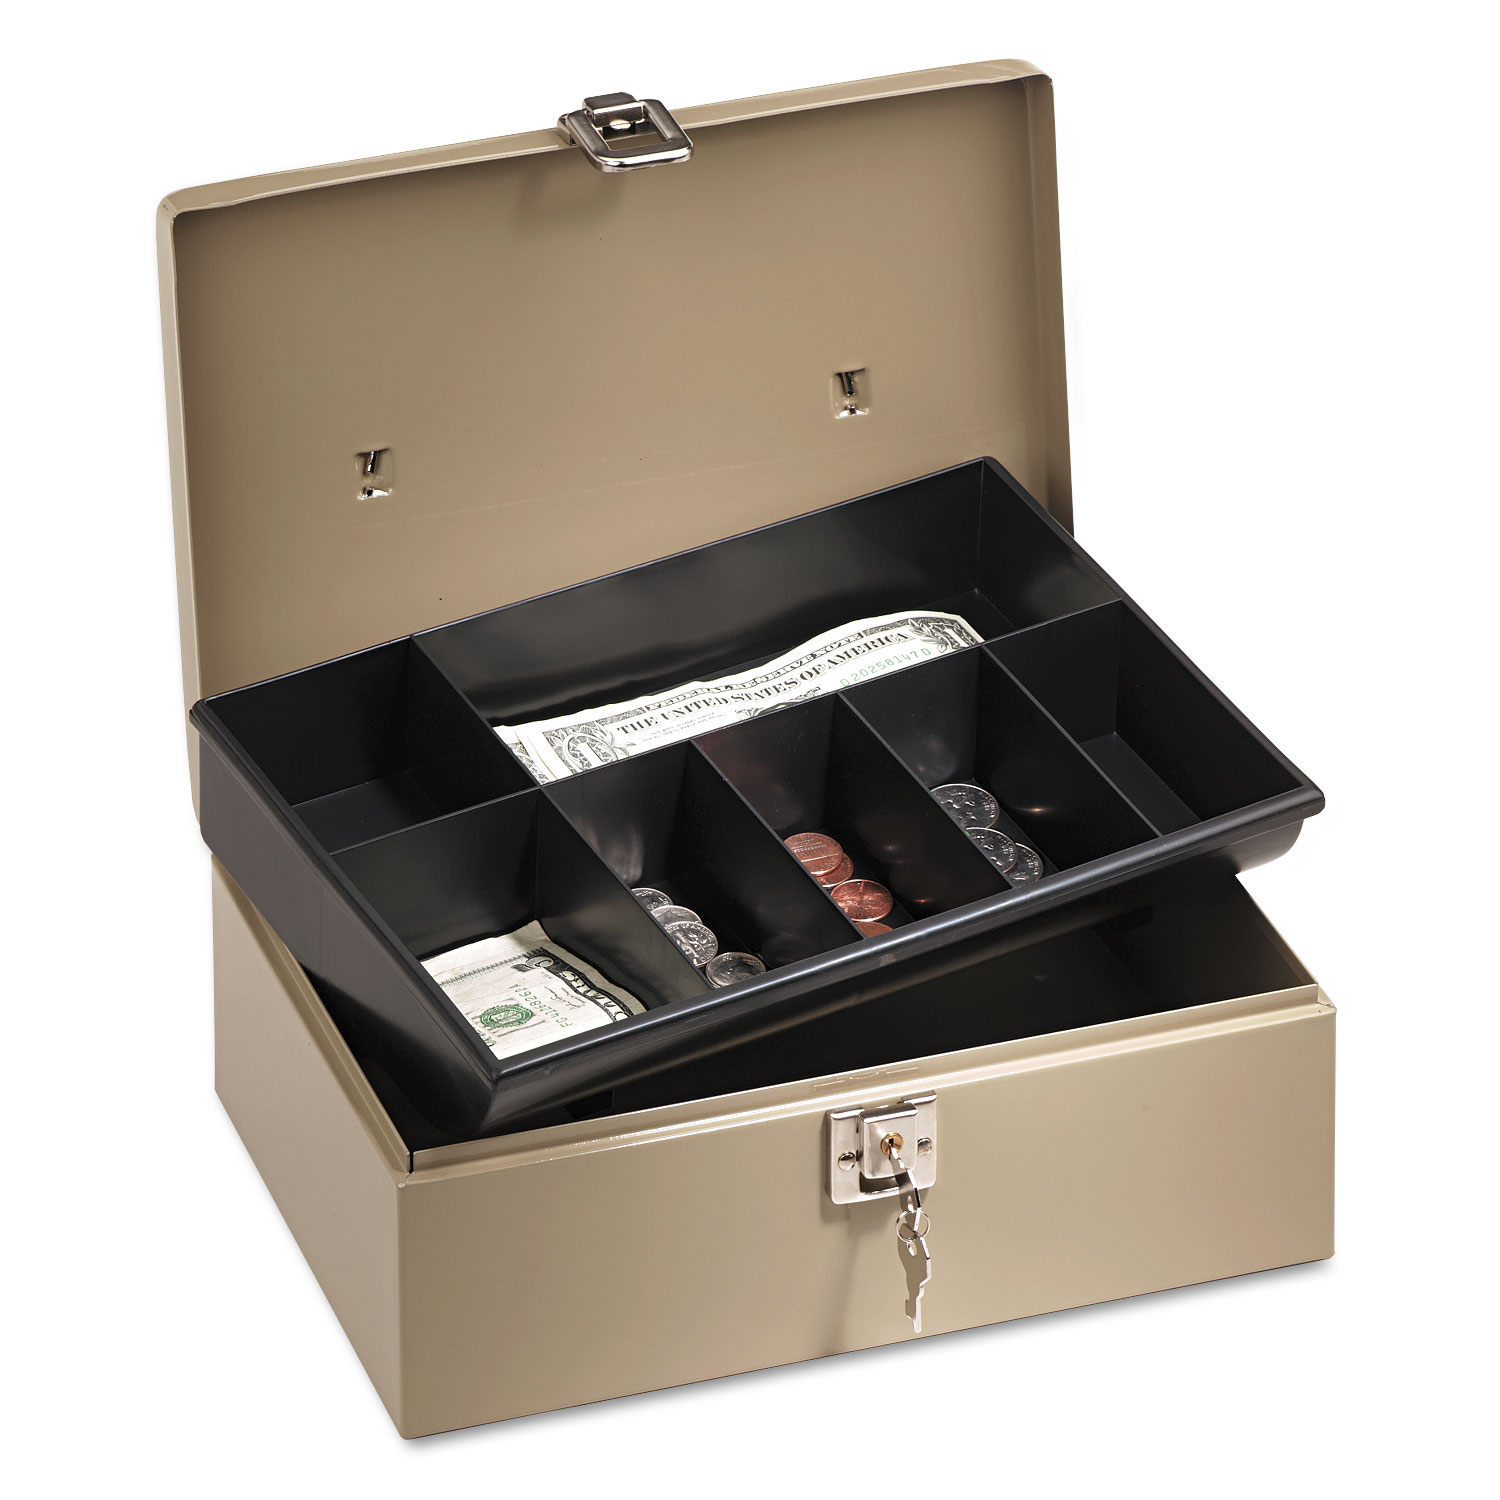  SecurIT 4963 Lock'n Latch Steel Cash Box w/7 Compartments, Key Lock, Pebble Beige (ICX94190023) 